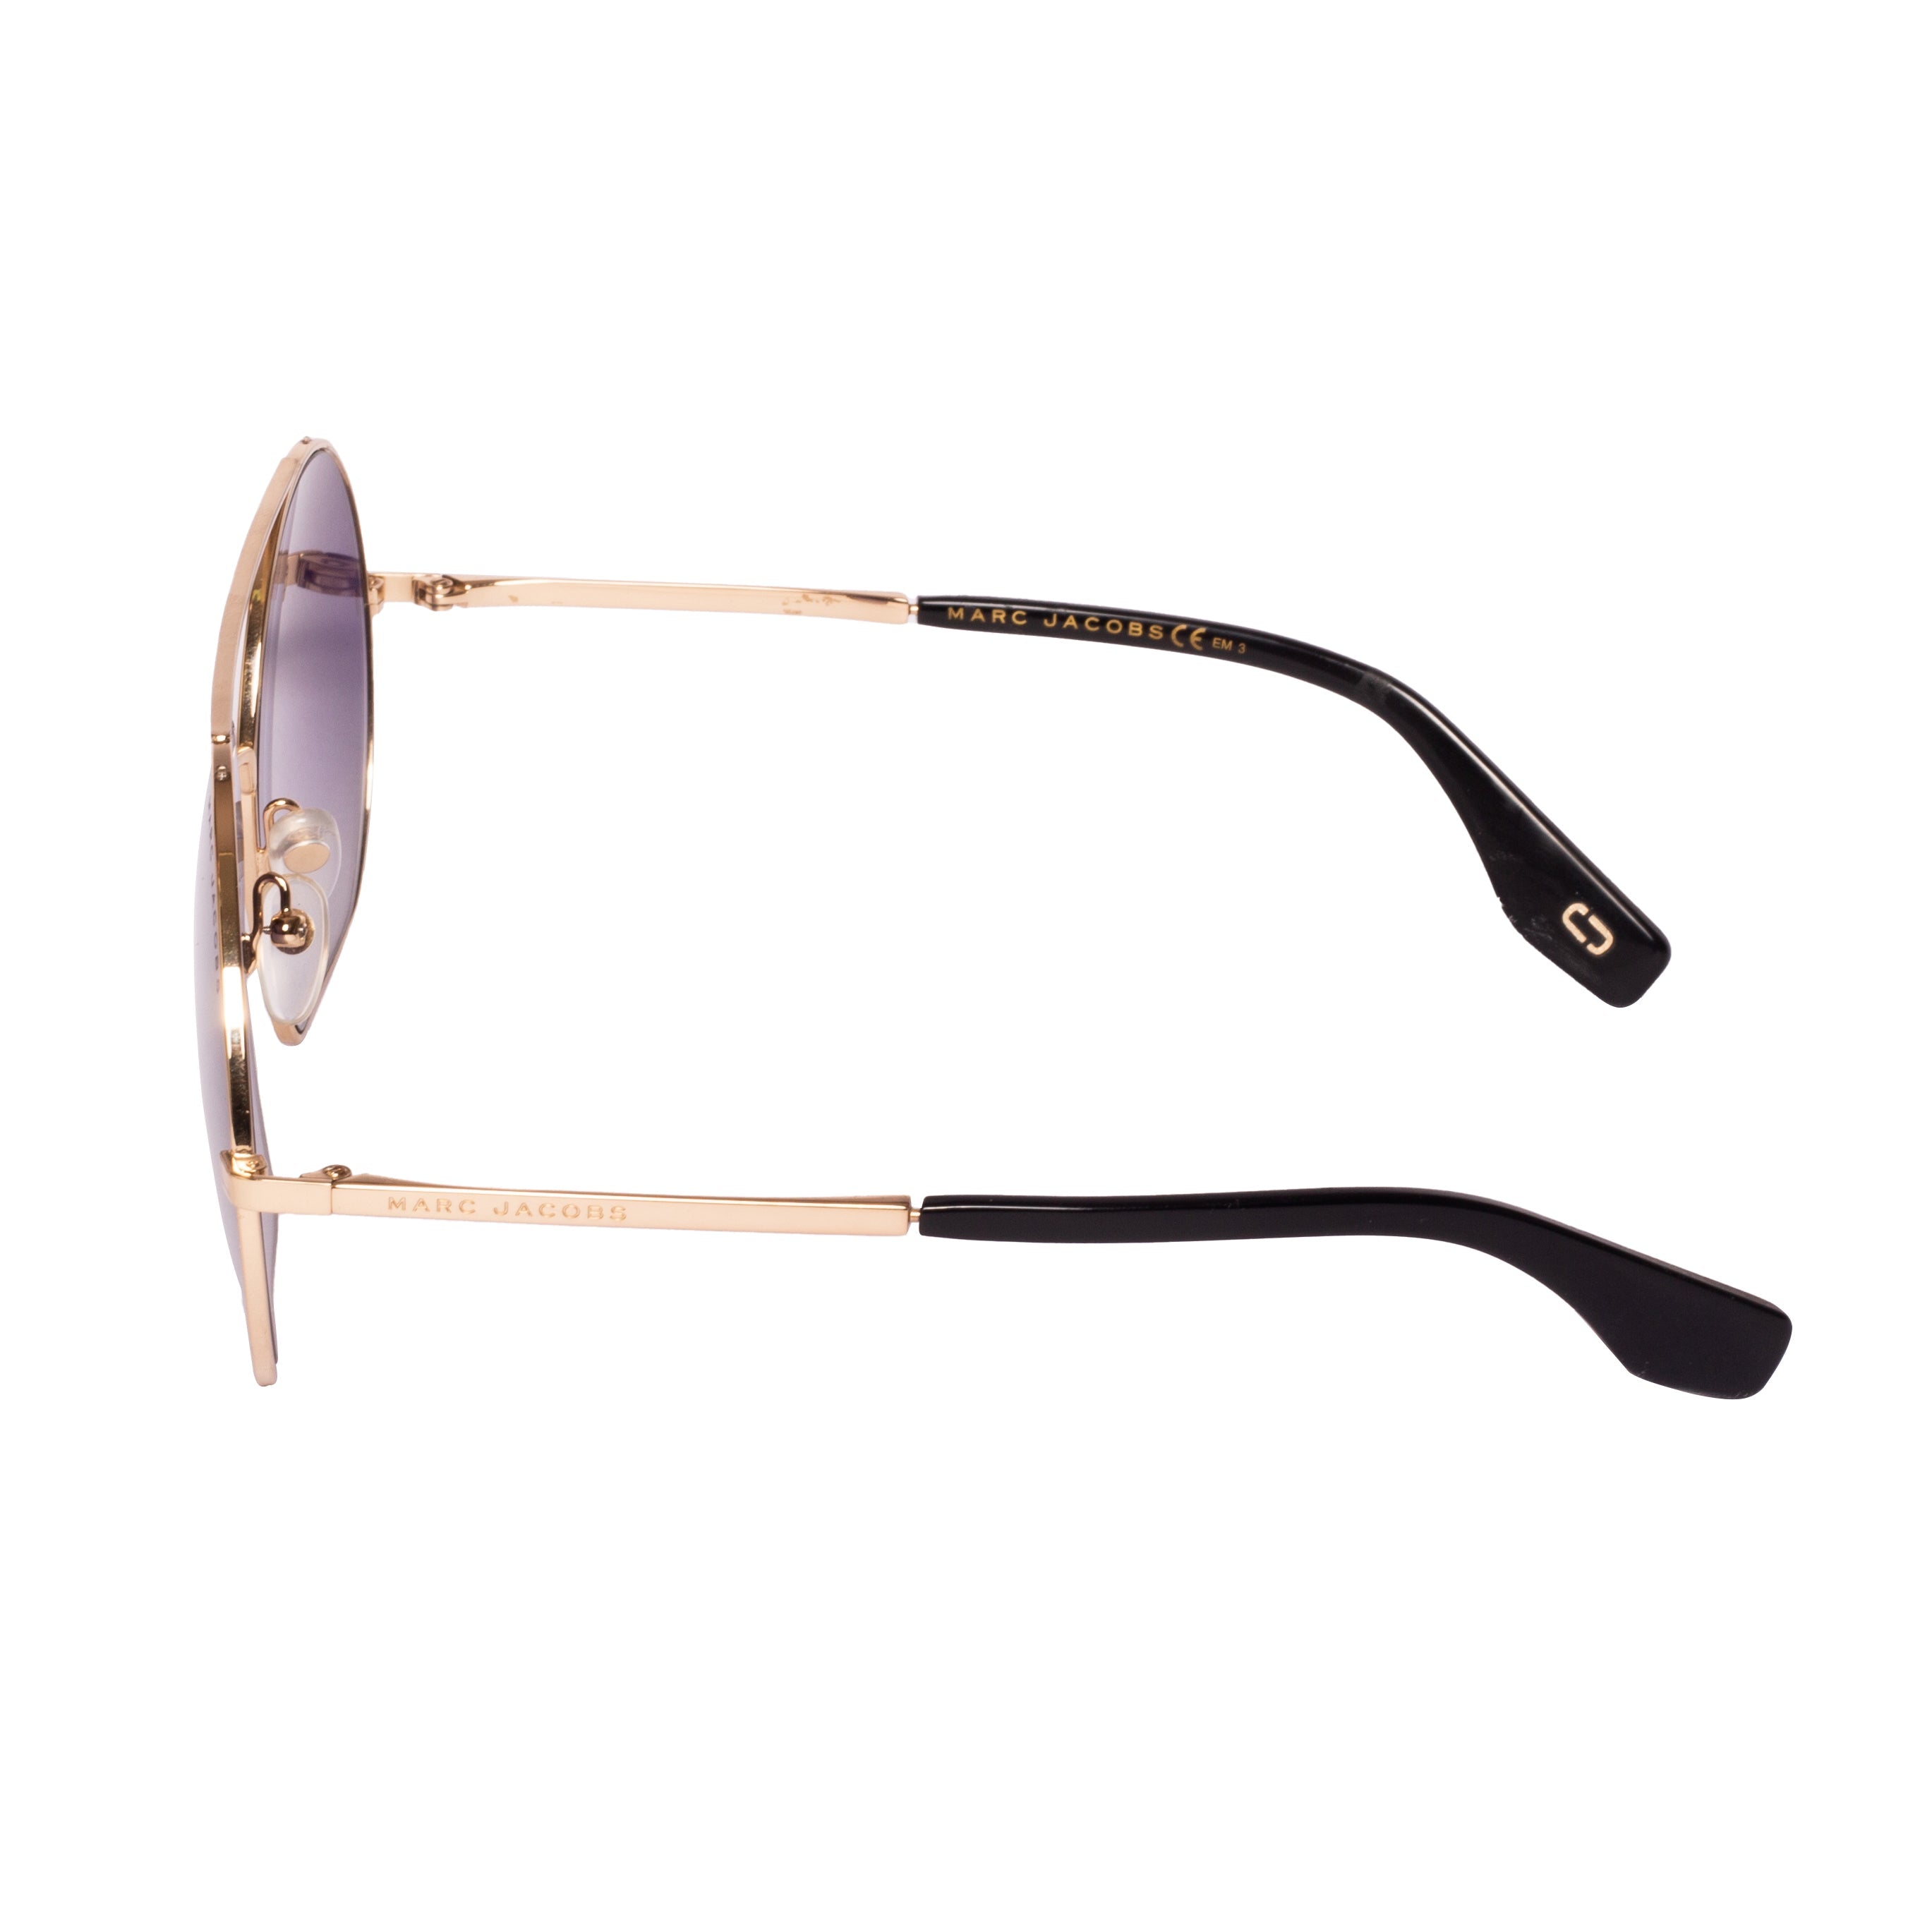 Marc Jacob-325/S-56-2F7 FQ Sunglasses - Premium Sunglasses from Marc Jacob - Just Rs. 12400! Shop now at Laxmi Opticians